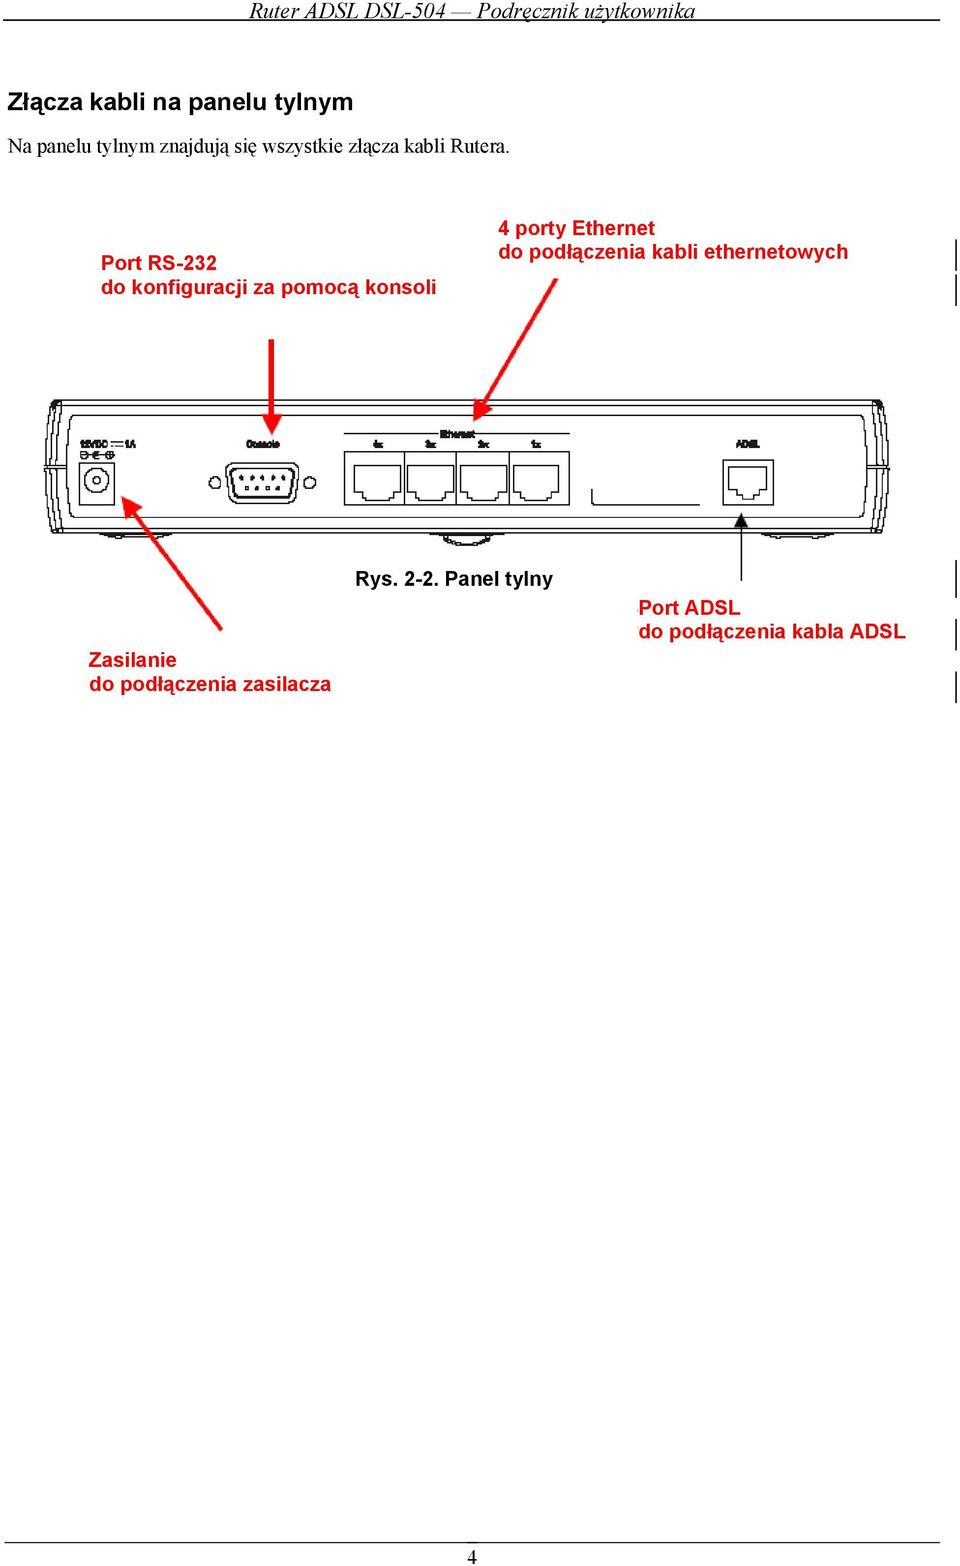 Port RS-232 do konfiguracji za pomocą konsoli 4 porty Ethernet do